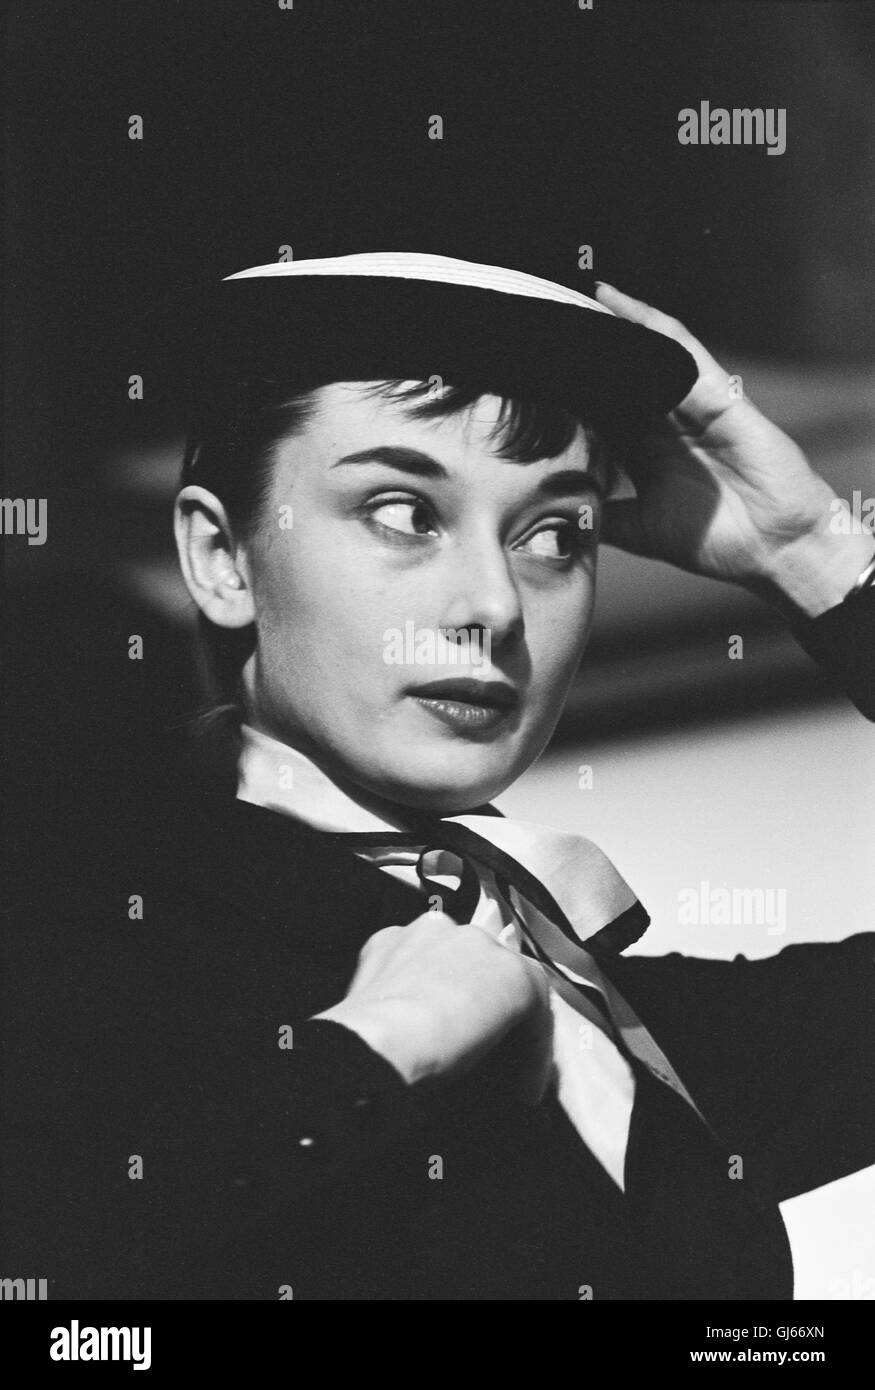 Audrey Hepburn preparando per una scena in vacanza romana Foto Stock